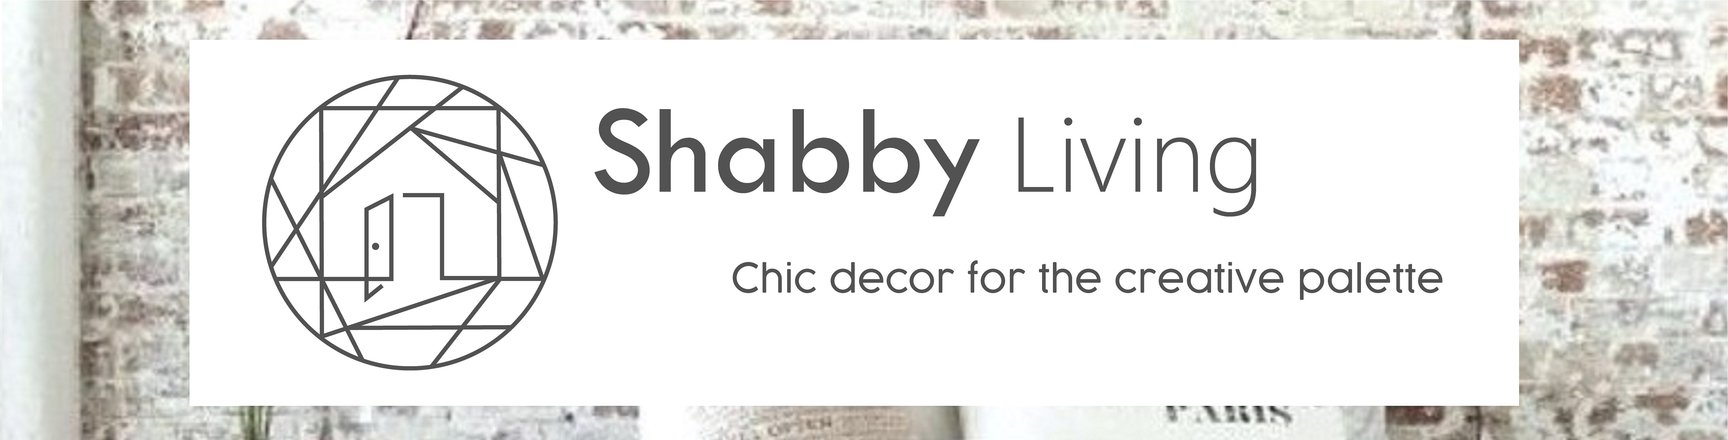 Shabby Chic, decor